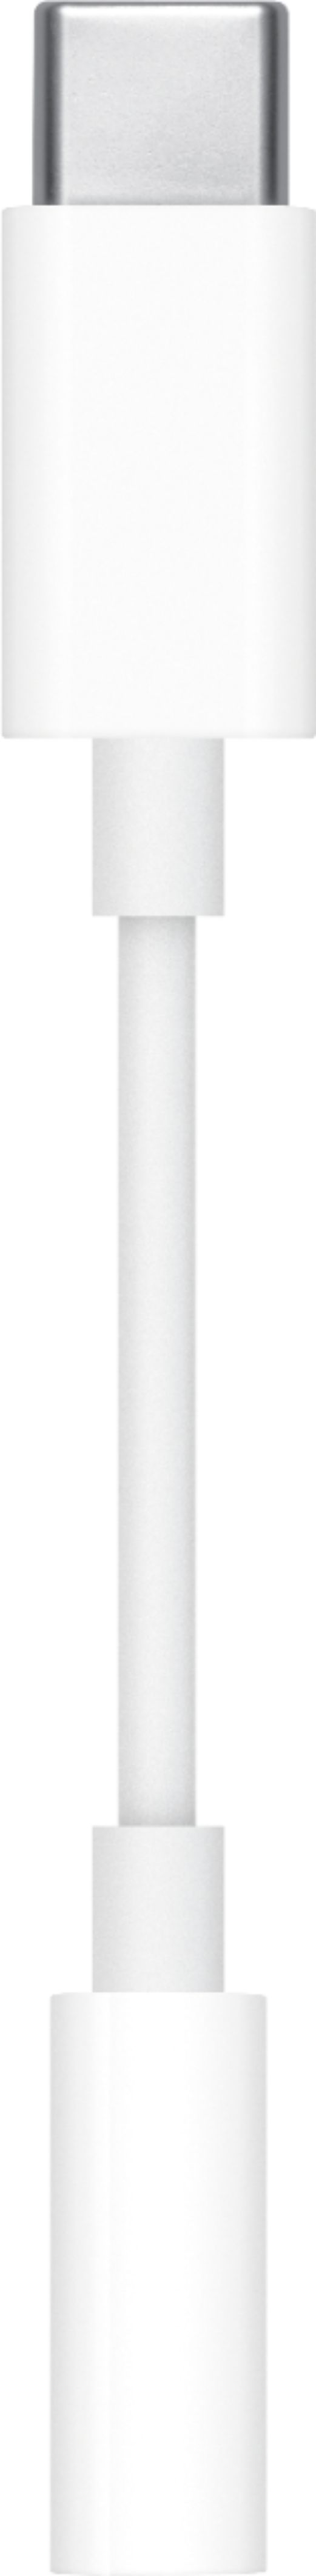 Postnummer ketcher luft Apple USB-C to 3.5mm Headphone Jack Adapter White MU7E2AM/A - Best Buy